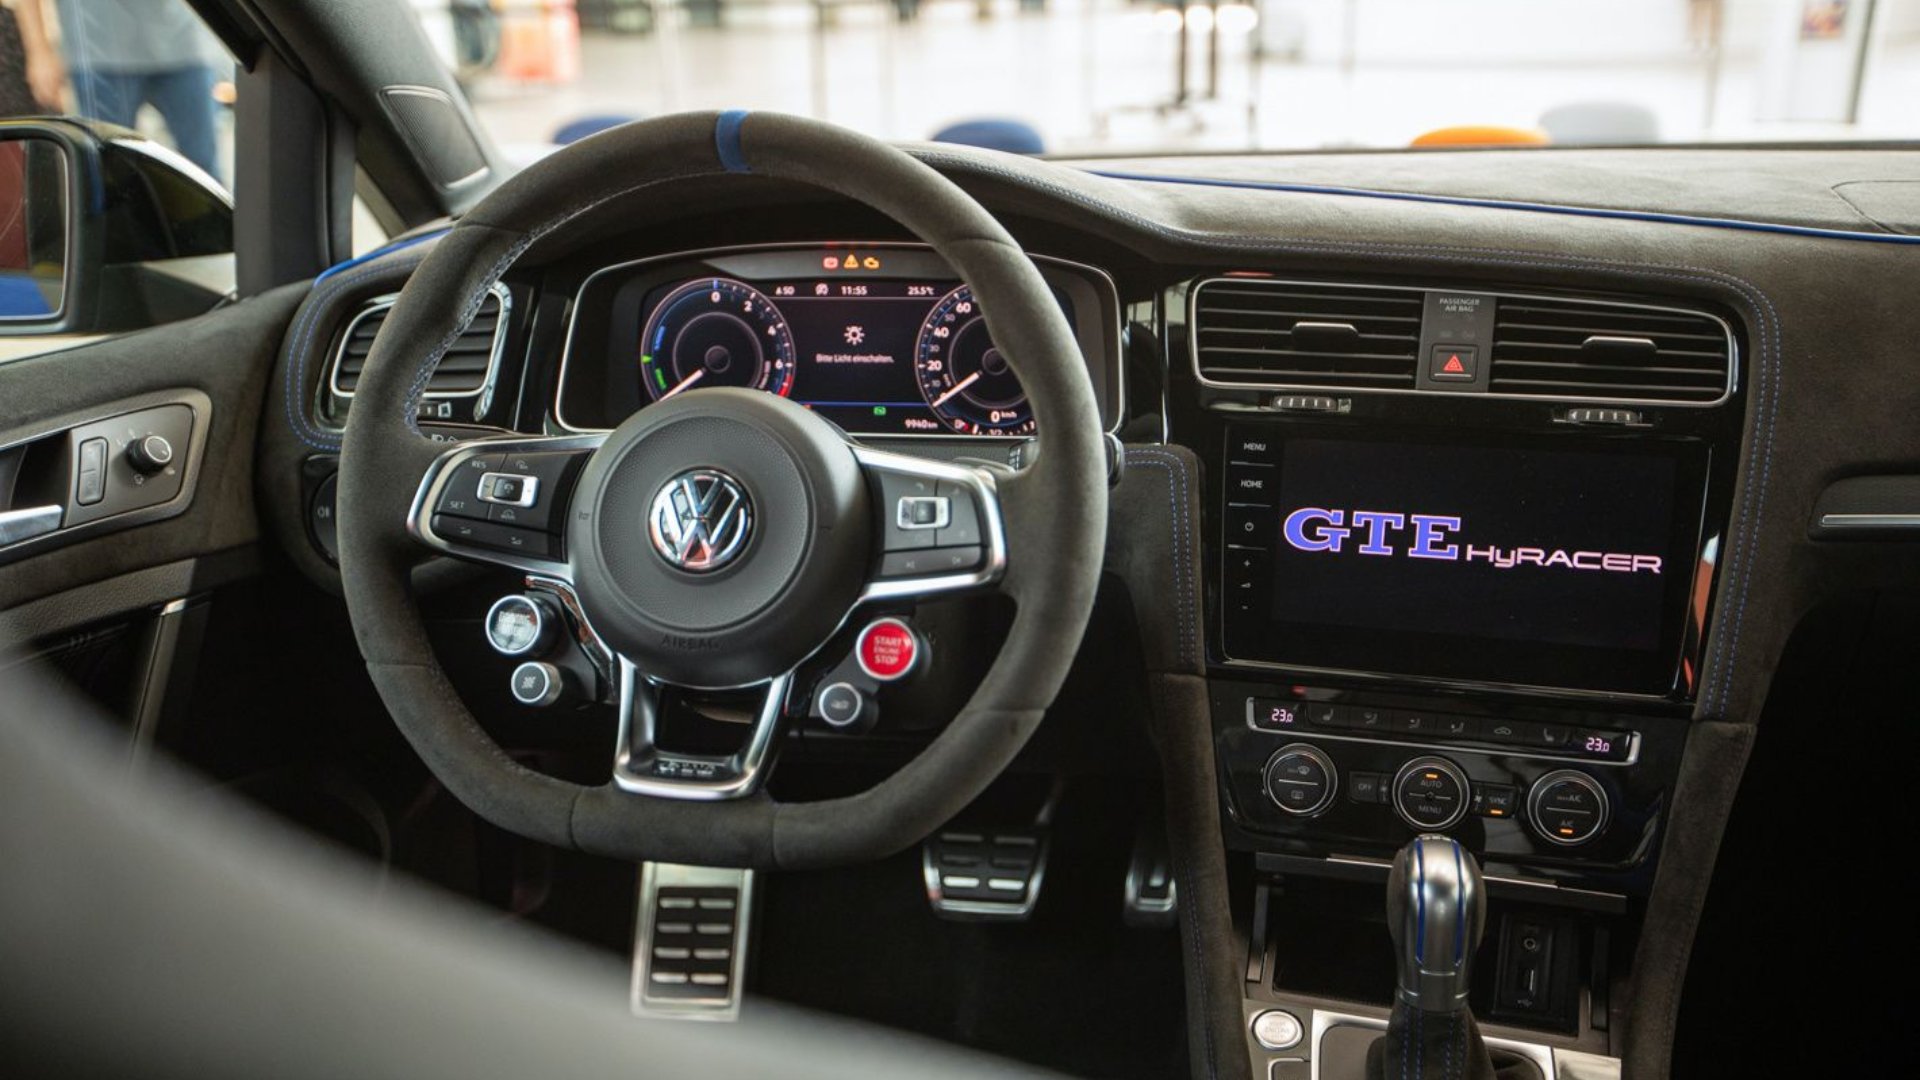 VW Golf GTE HyRACER (2)